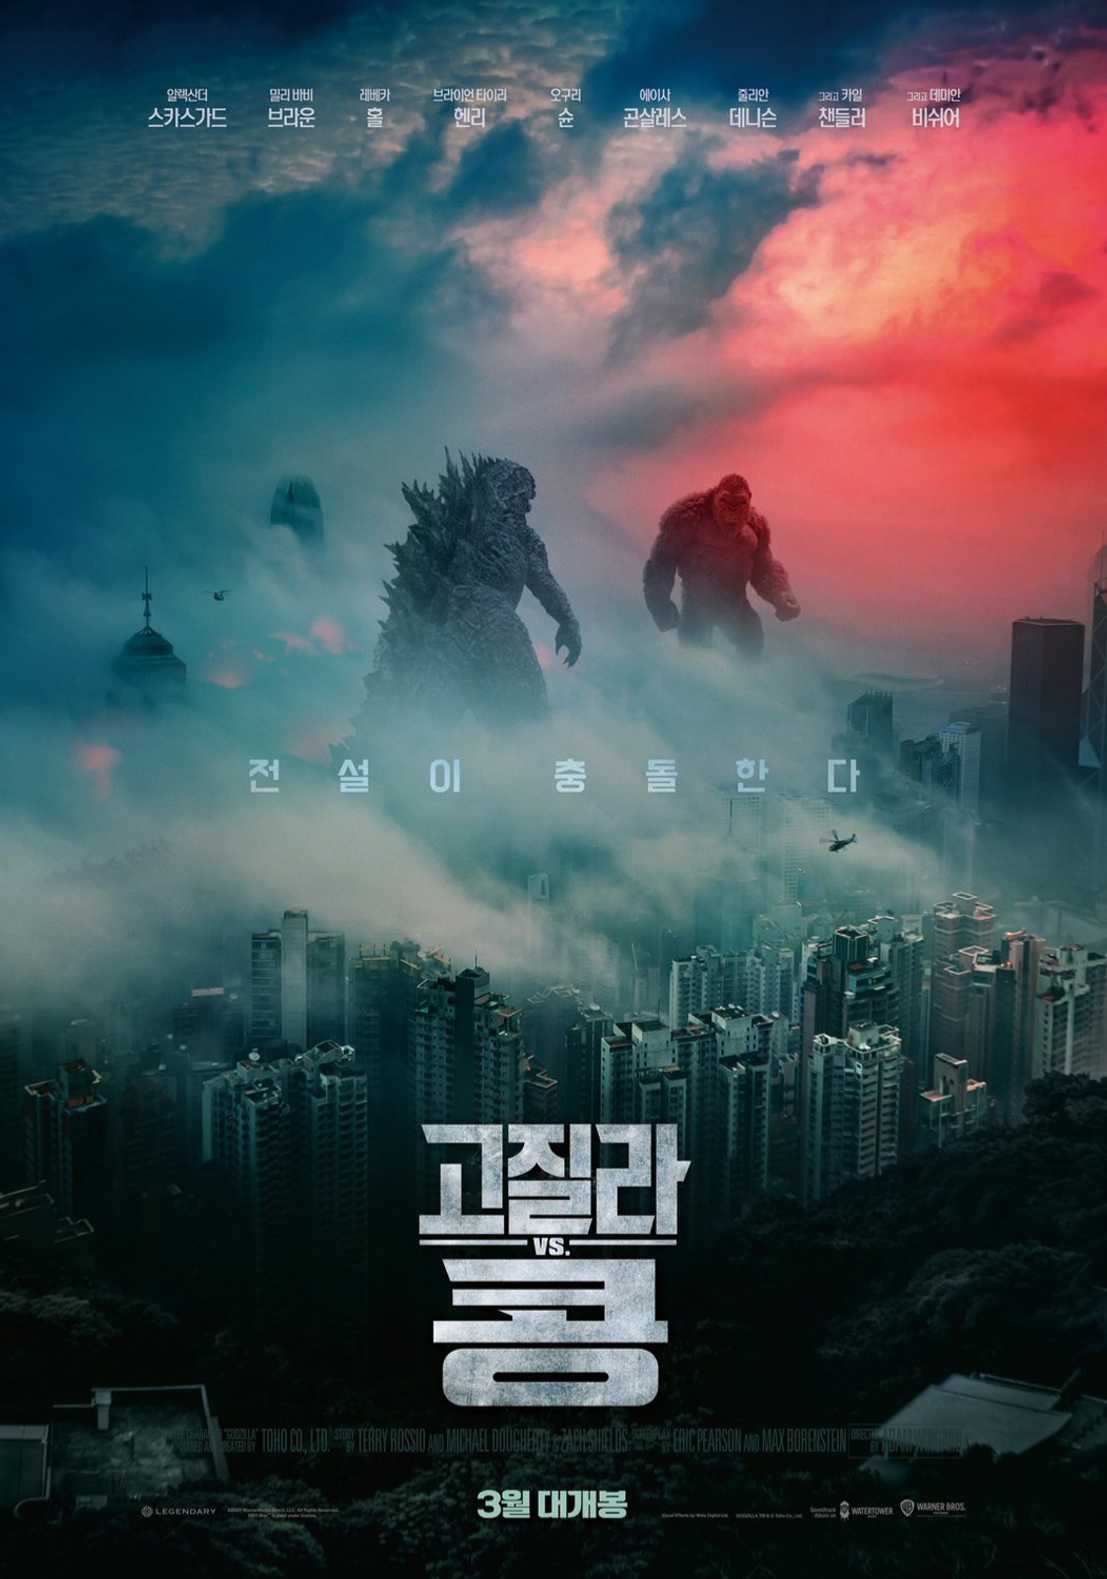 Godzilla Vs Kong Poster 1